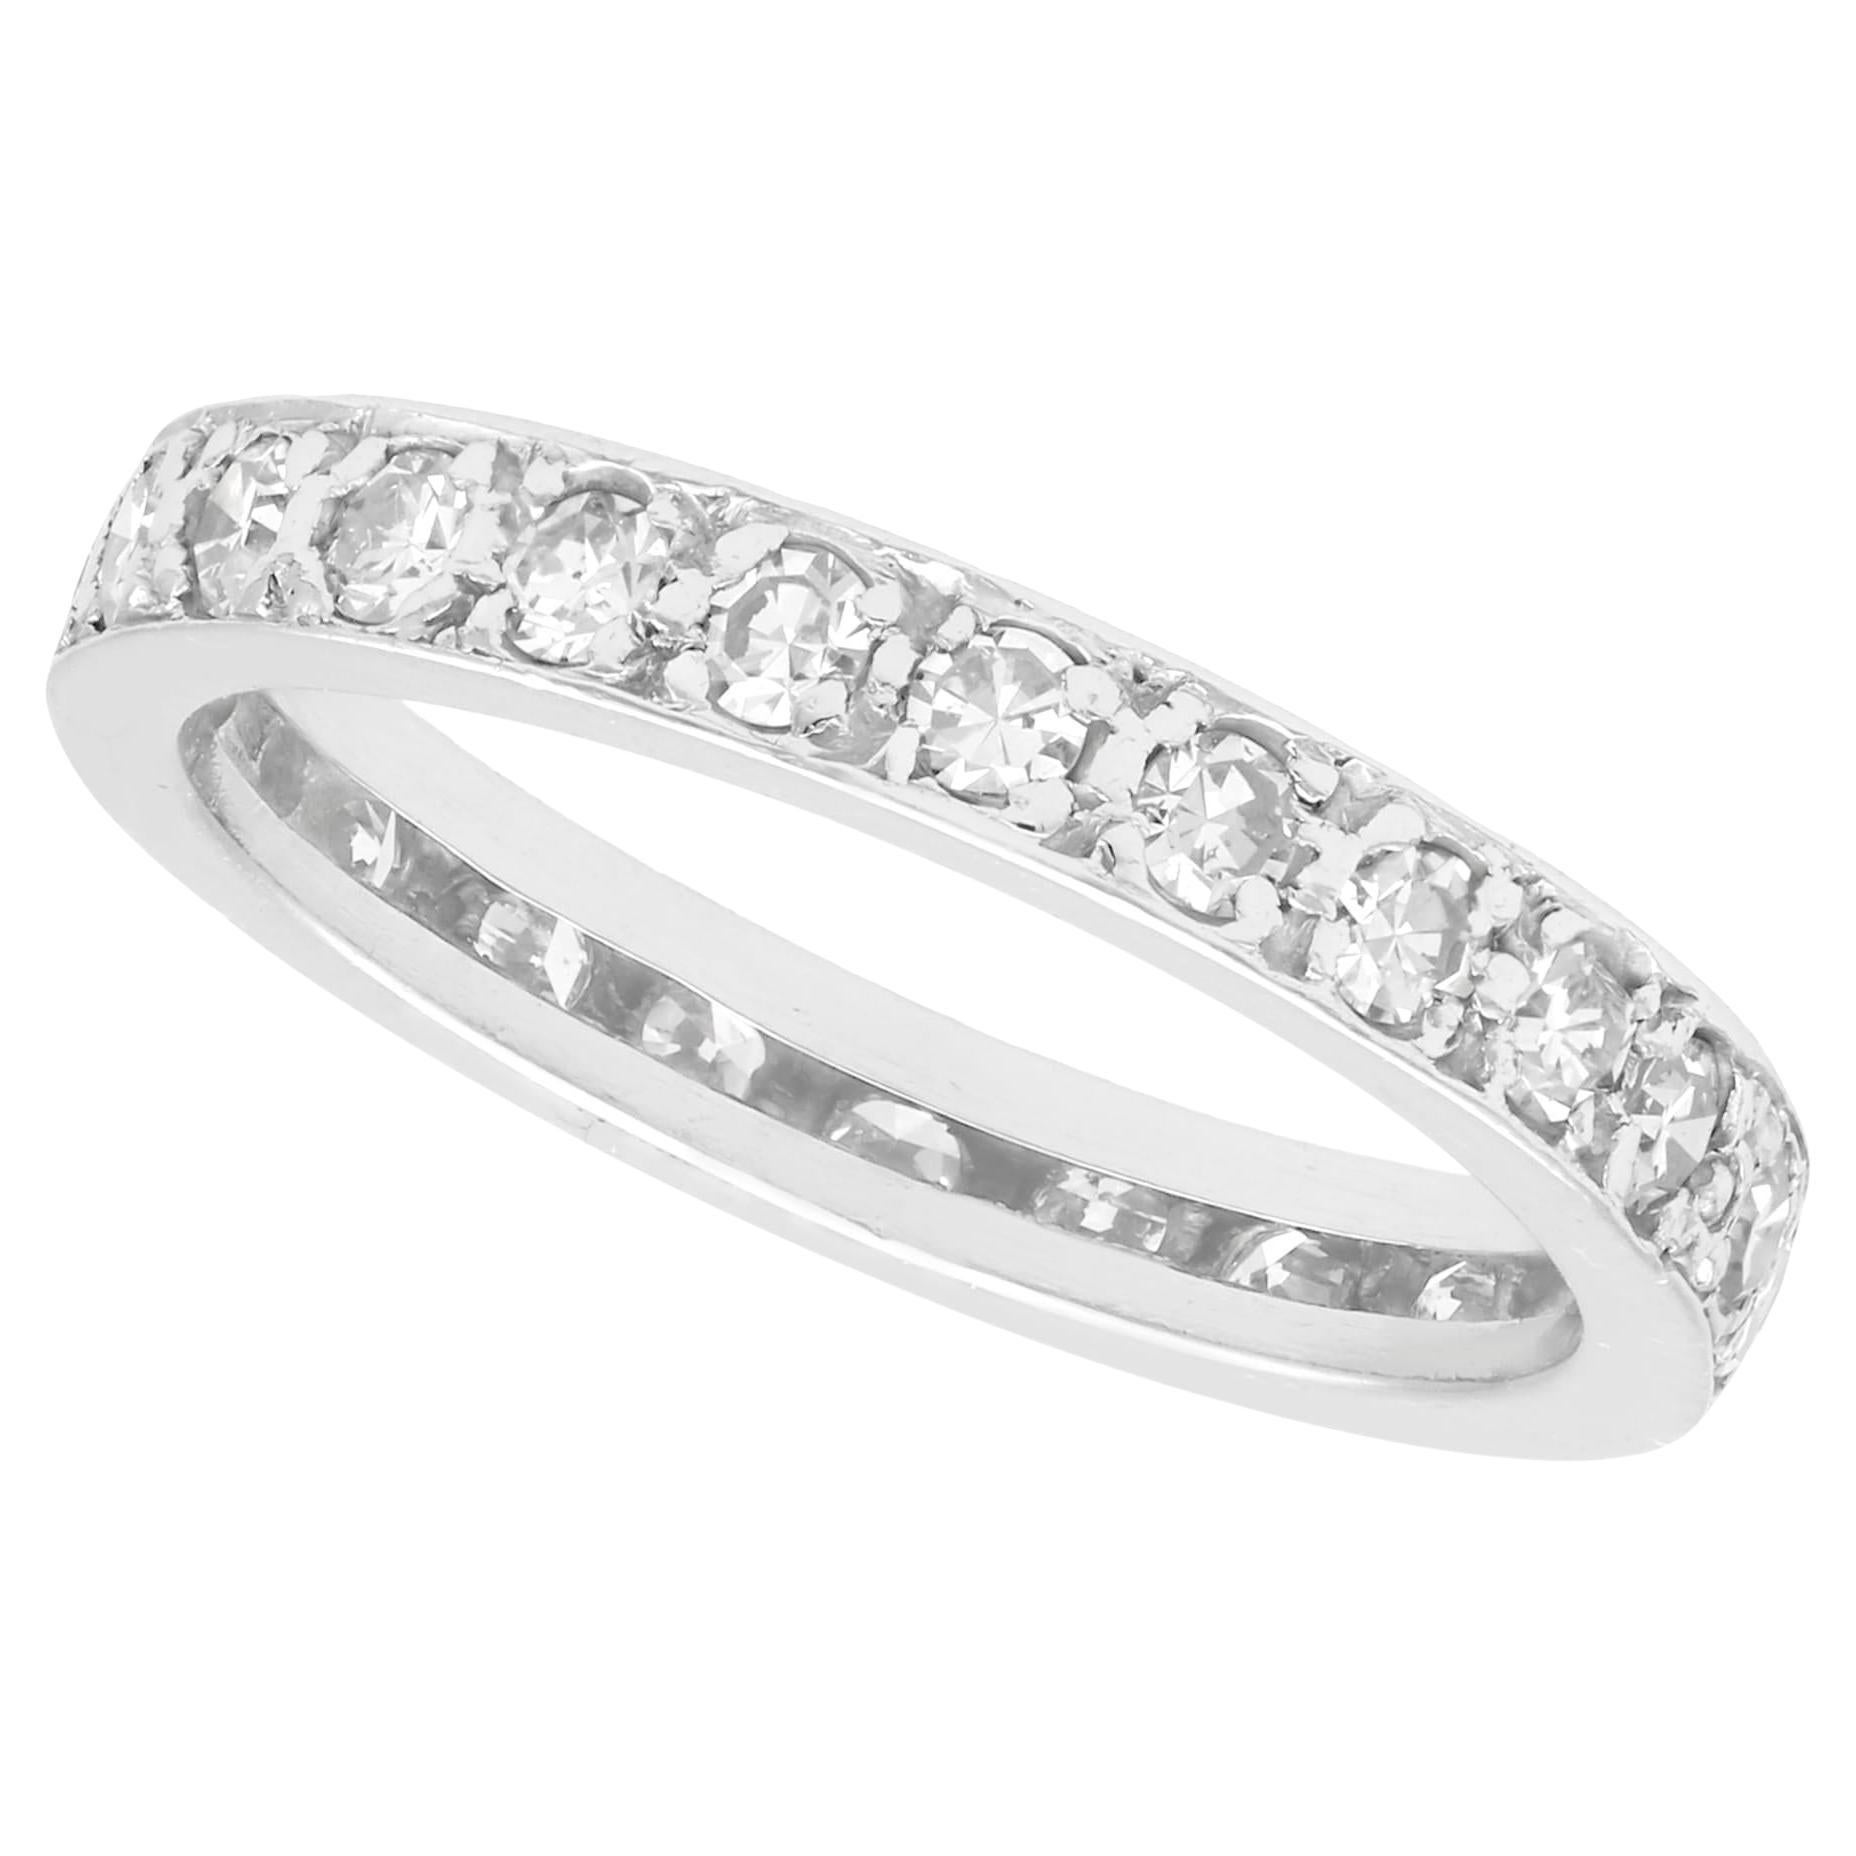 Antique 1930s Diamond and 18K White Gold Full Eternity Engagement Ring